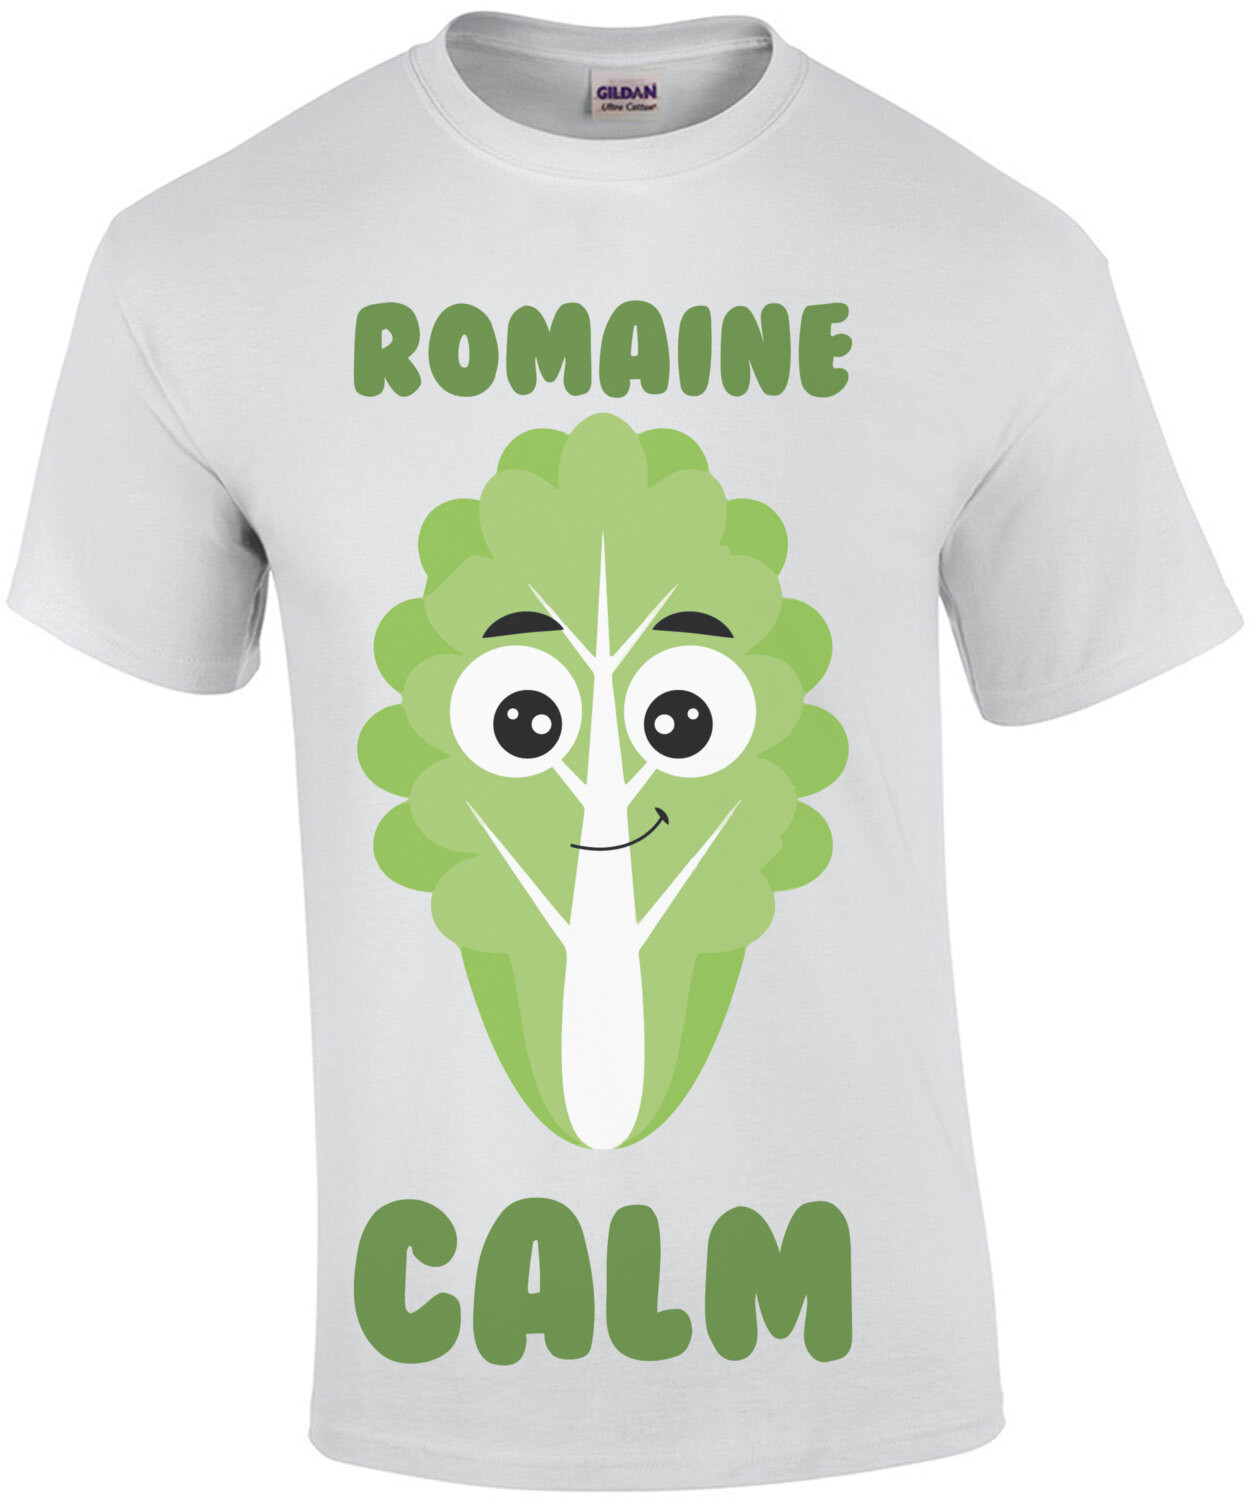 Romaine Calm - Funny food pun t-shirt